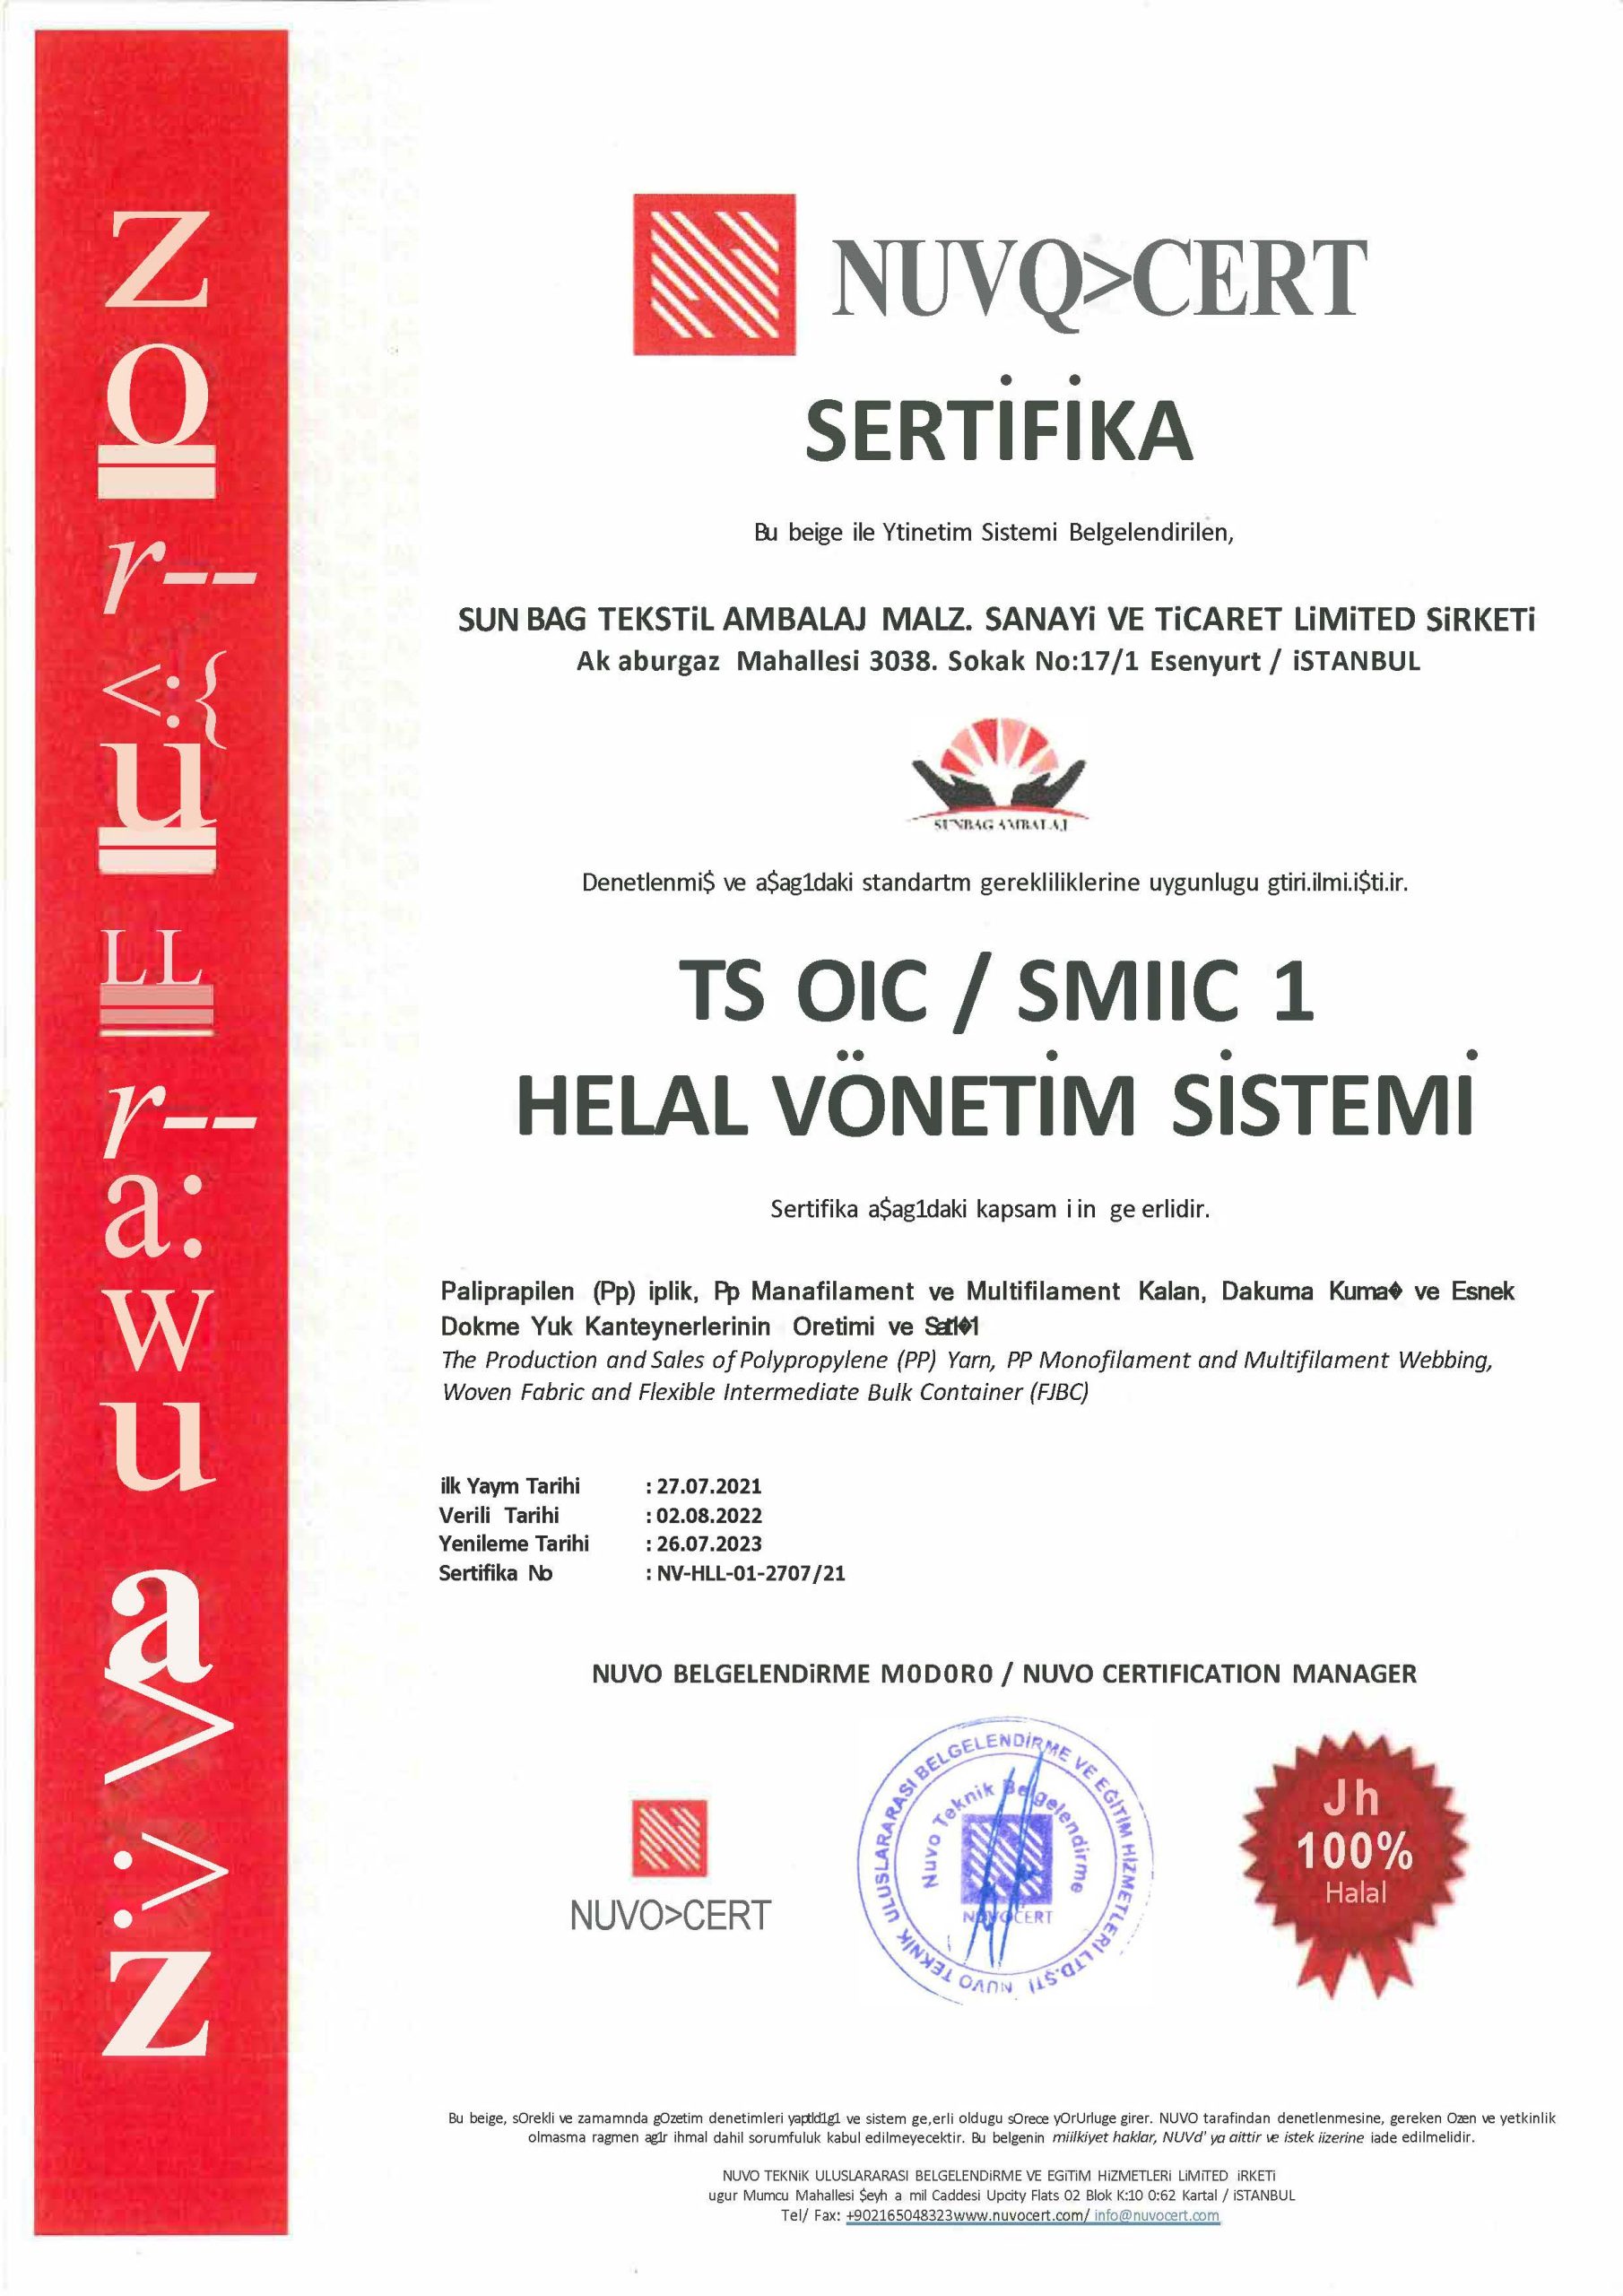 718-halal-certification